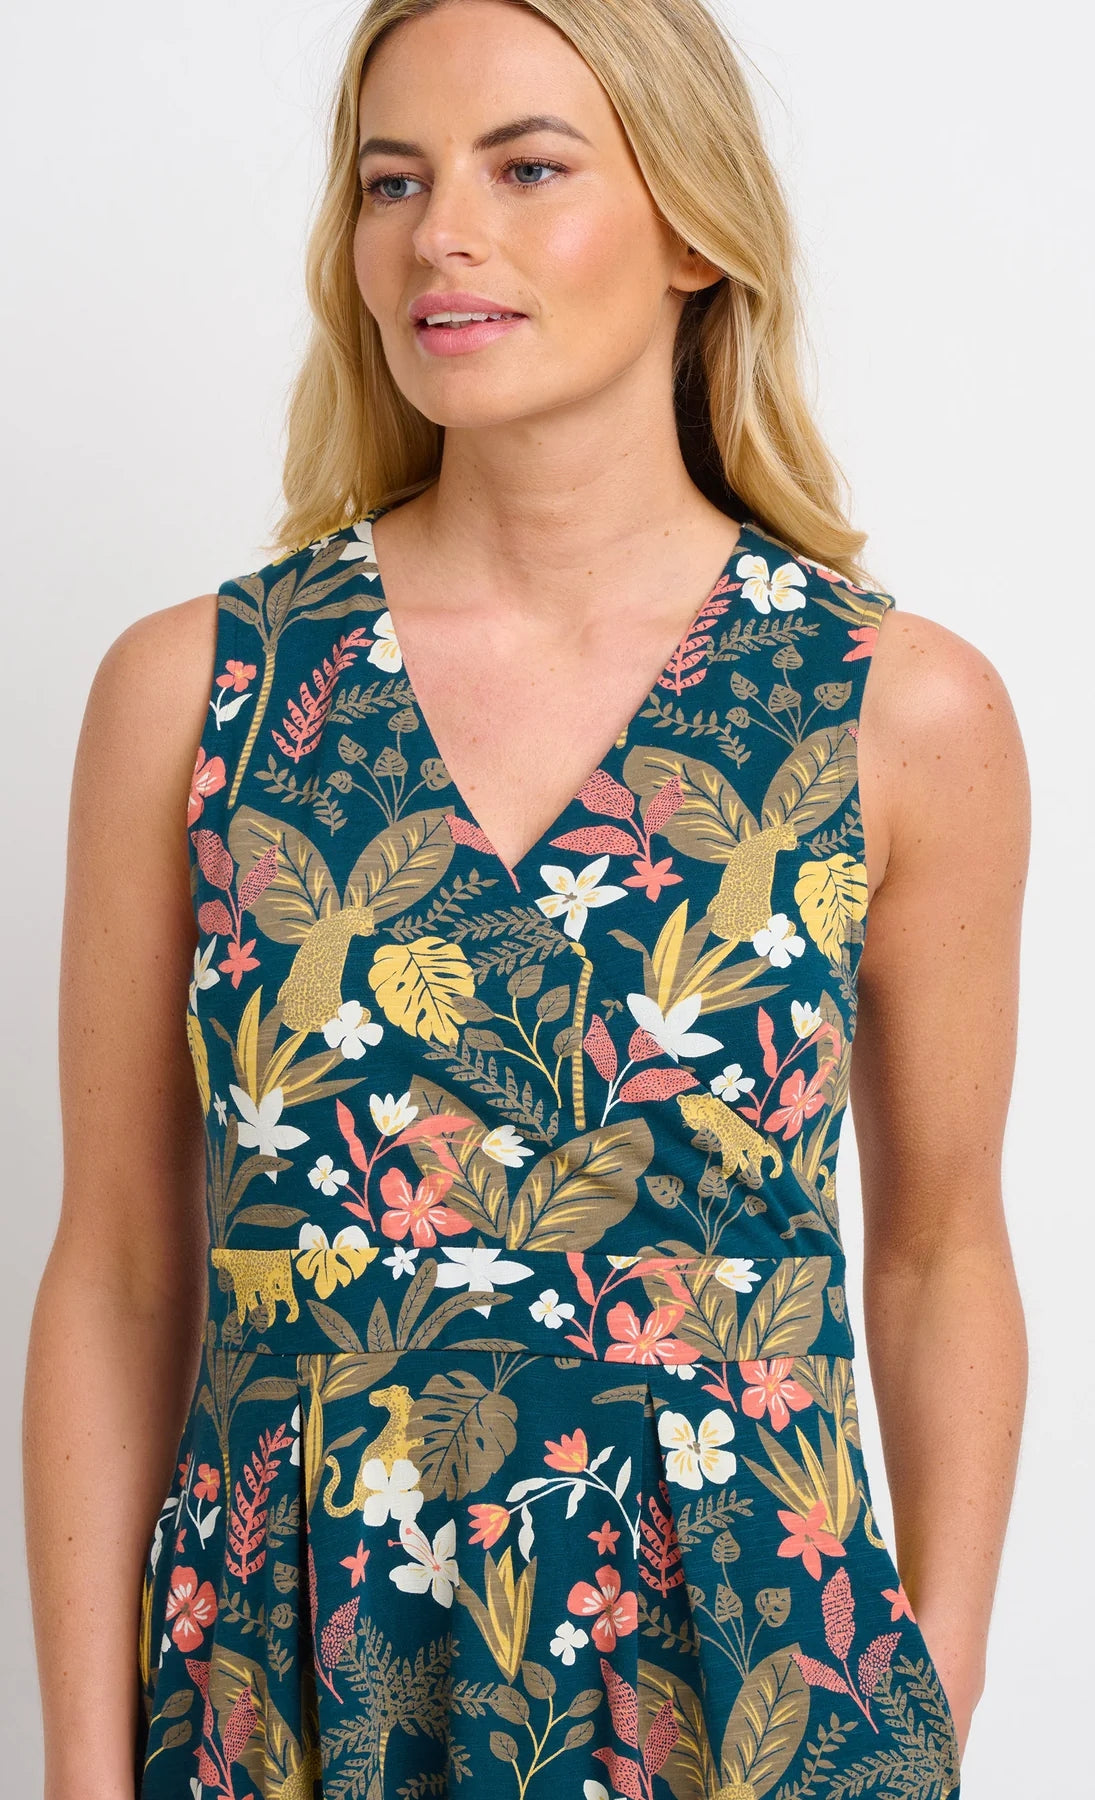 Women's jungle floral print dress from Brakeburn